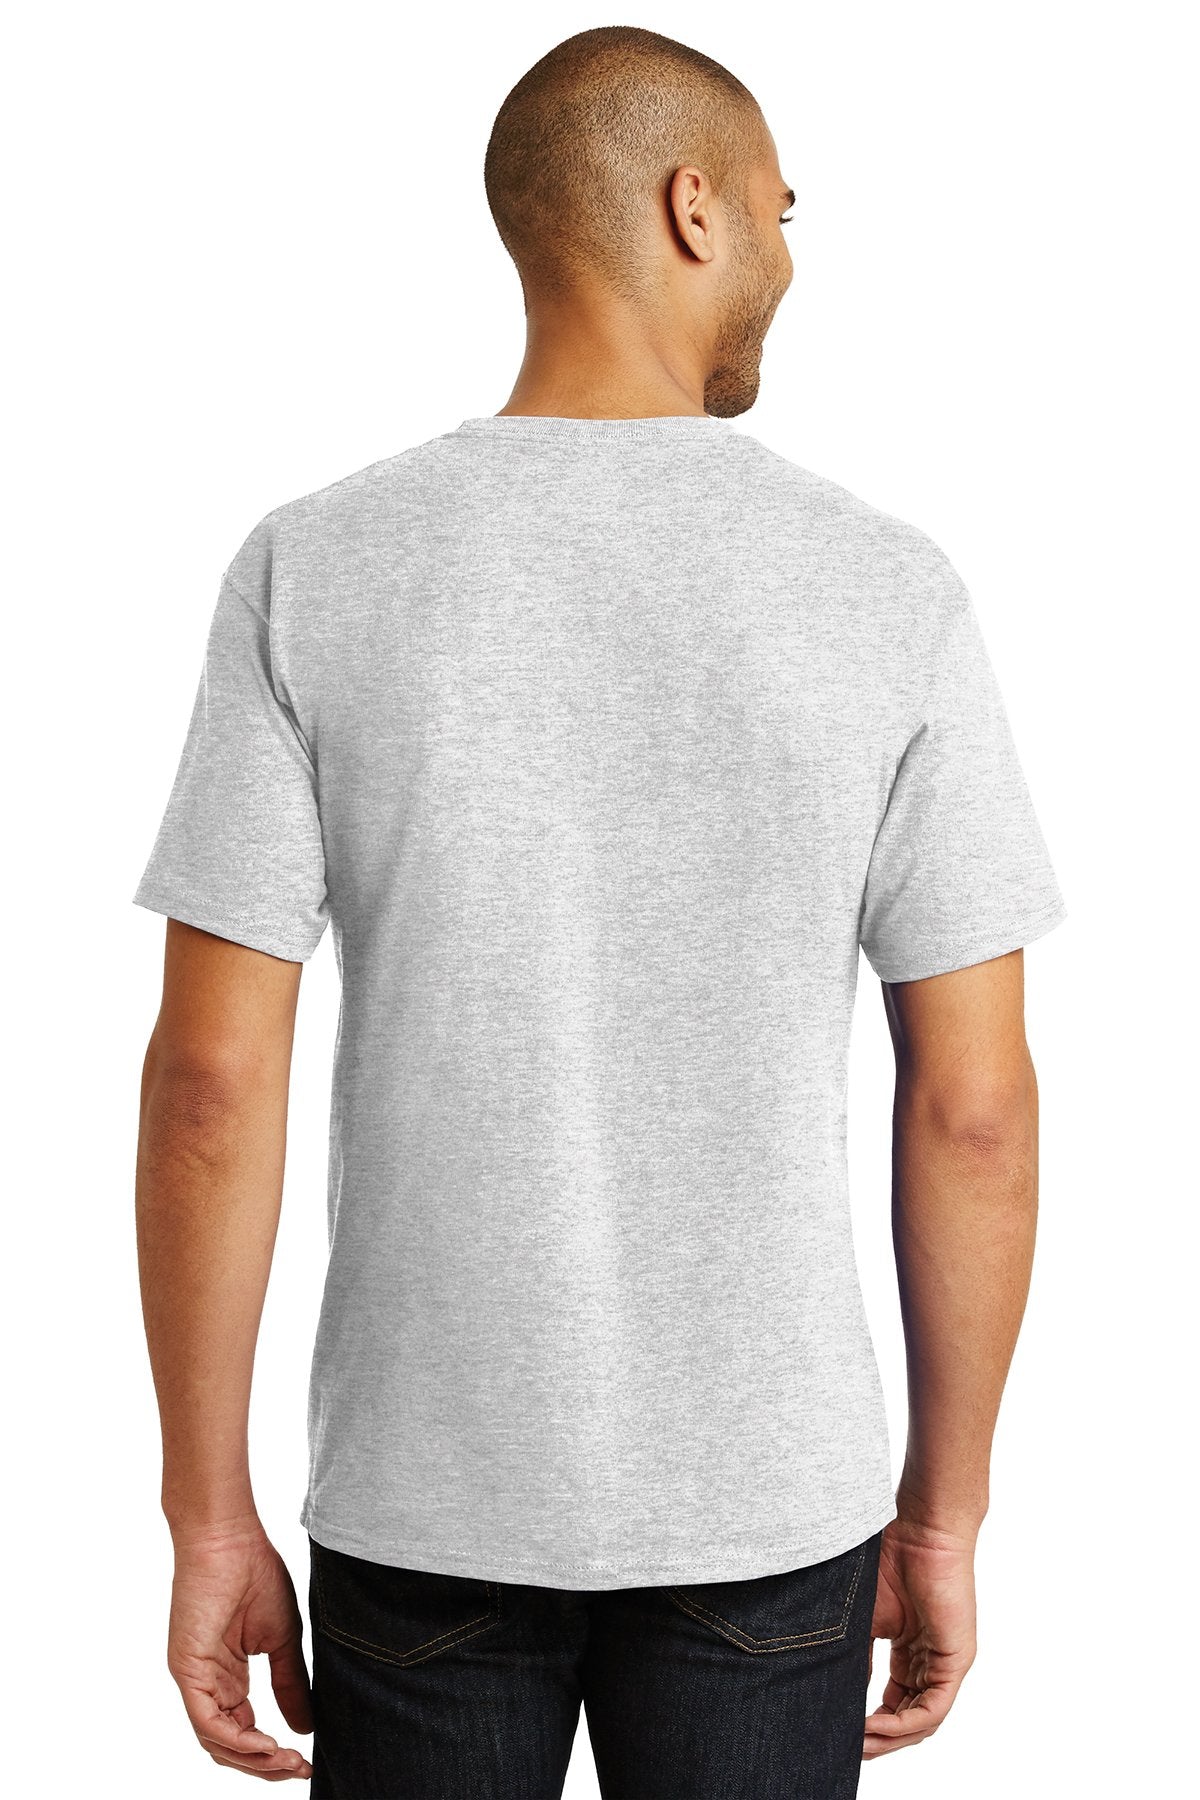 hanes tagless cotton t shirt 5250 ash